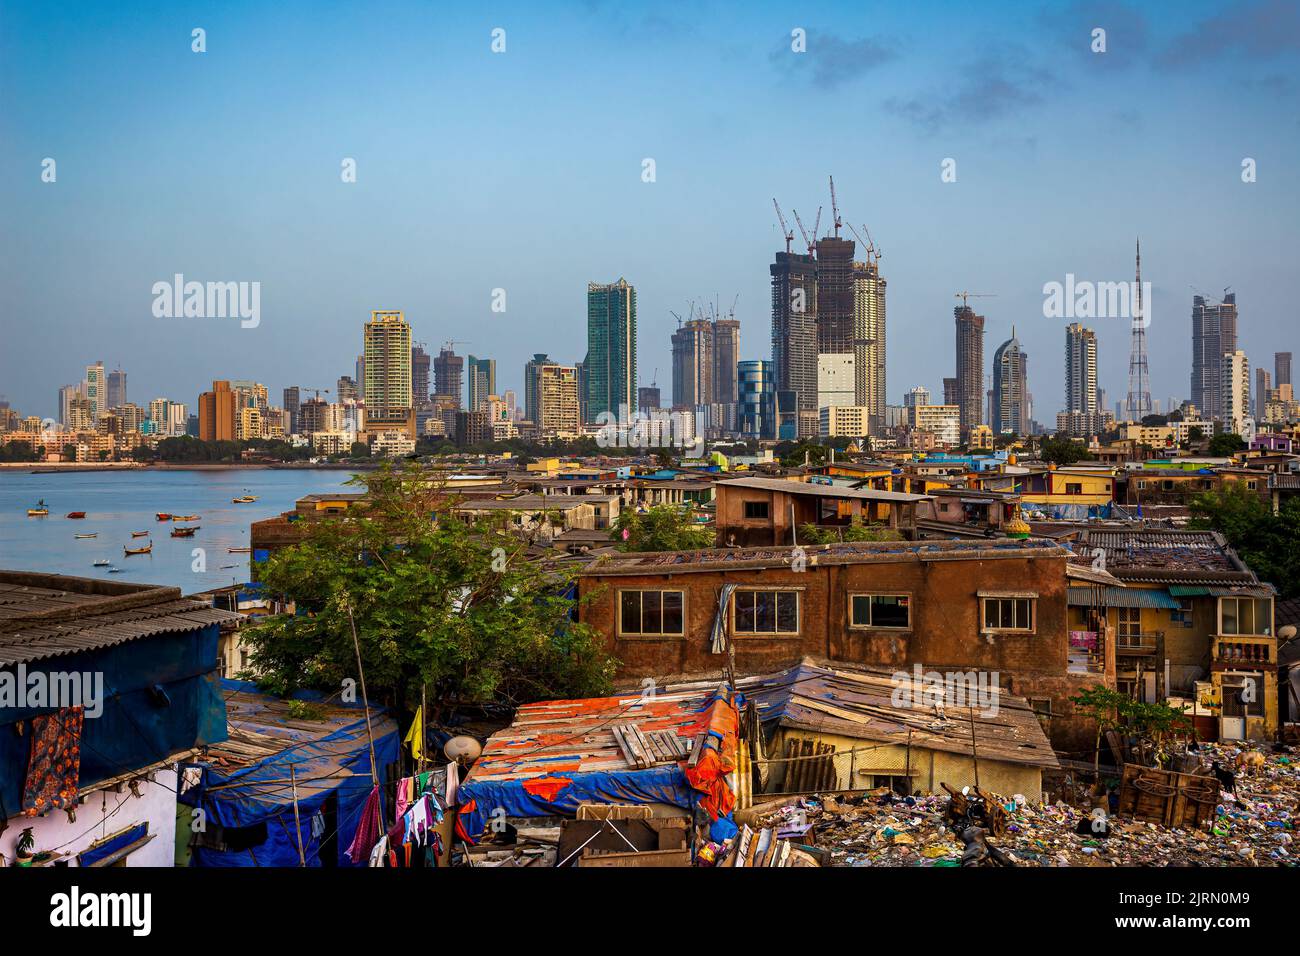 Mumbai cityscape with a striking contrast between poverty and wealth. Photo taken on 19th May 2018 in Mumbai, Maharashtra, India. Stock Photo